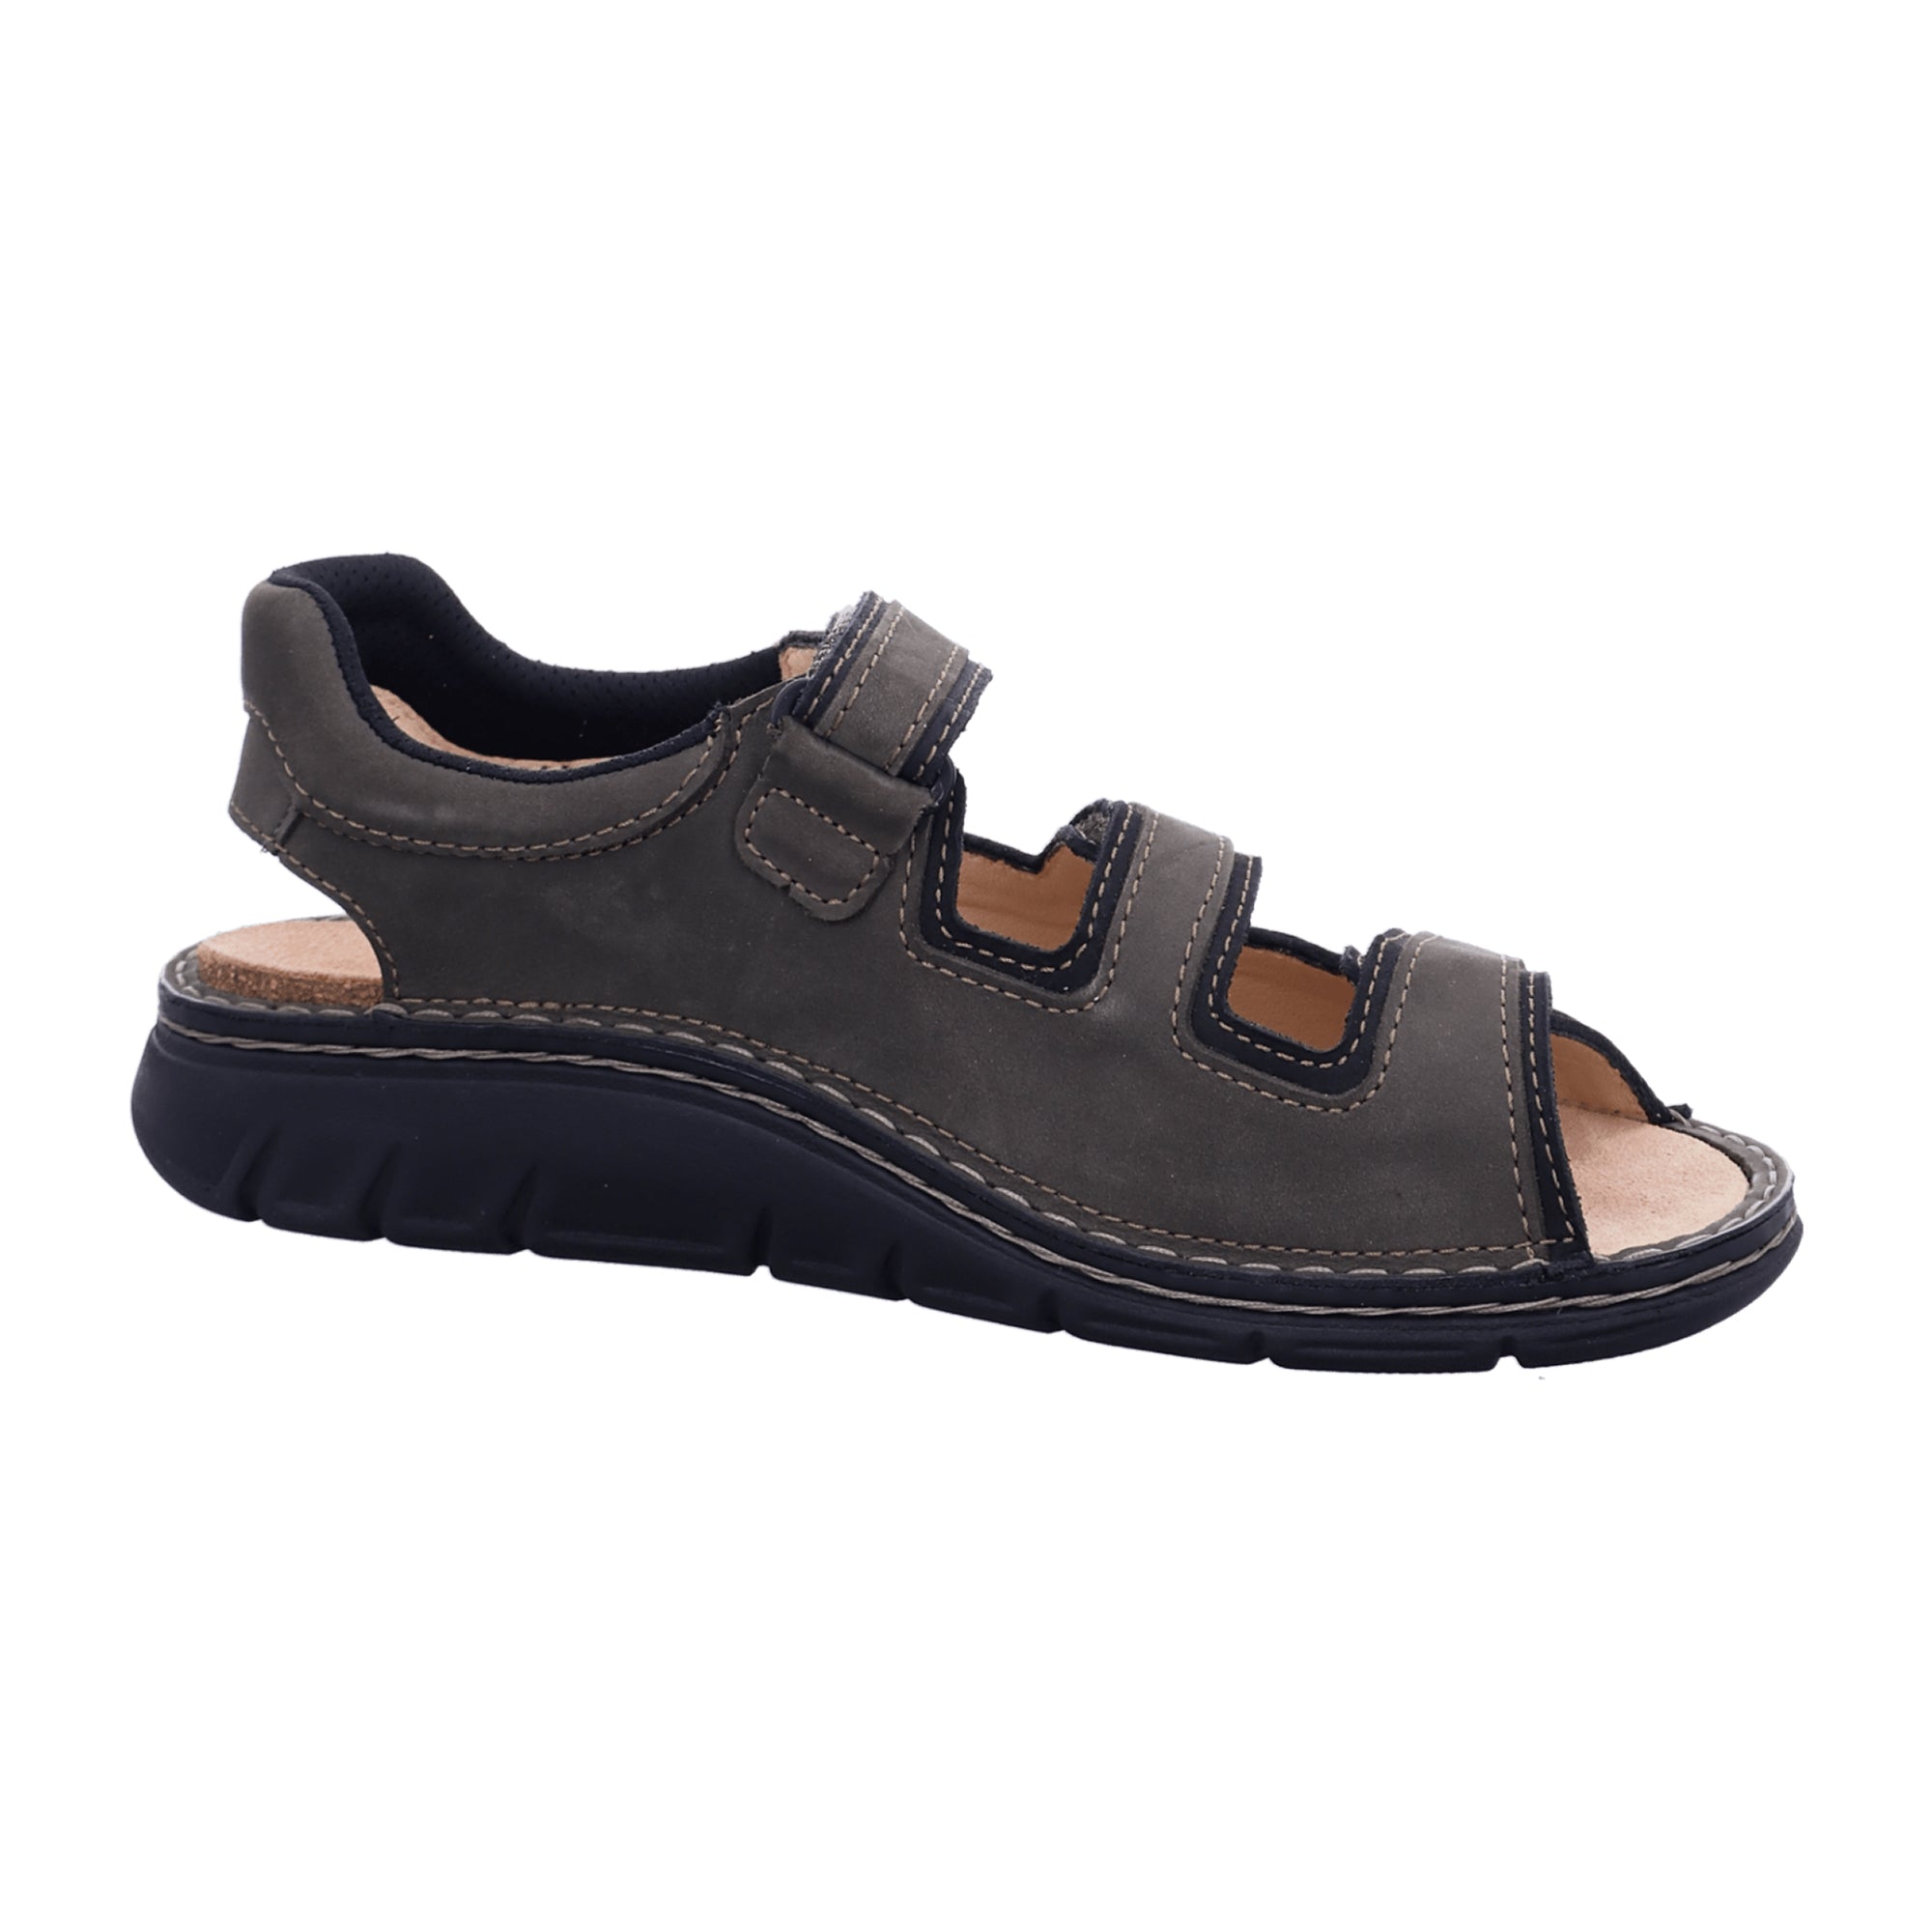 Finn Comfort Casablanca Men's Comfort Shoes, Stylish Grey Leather